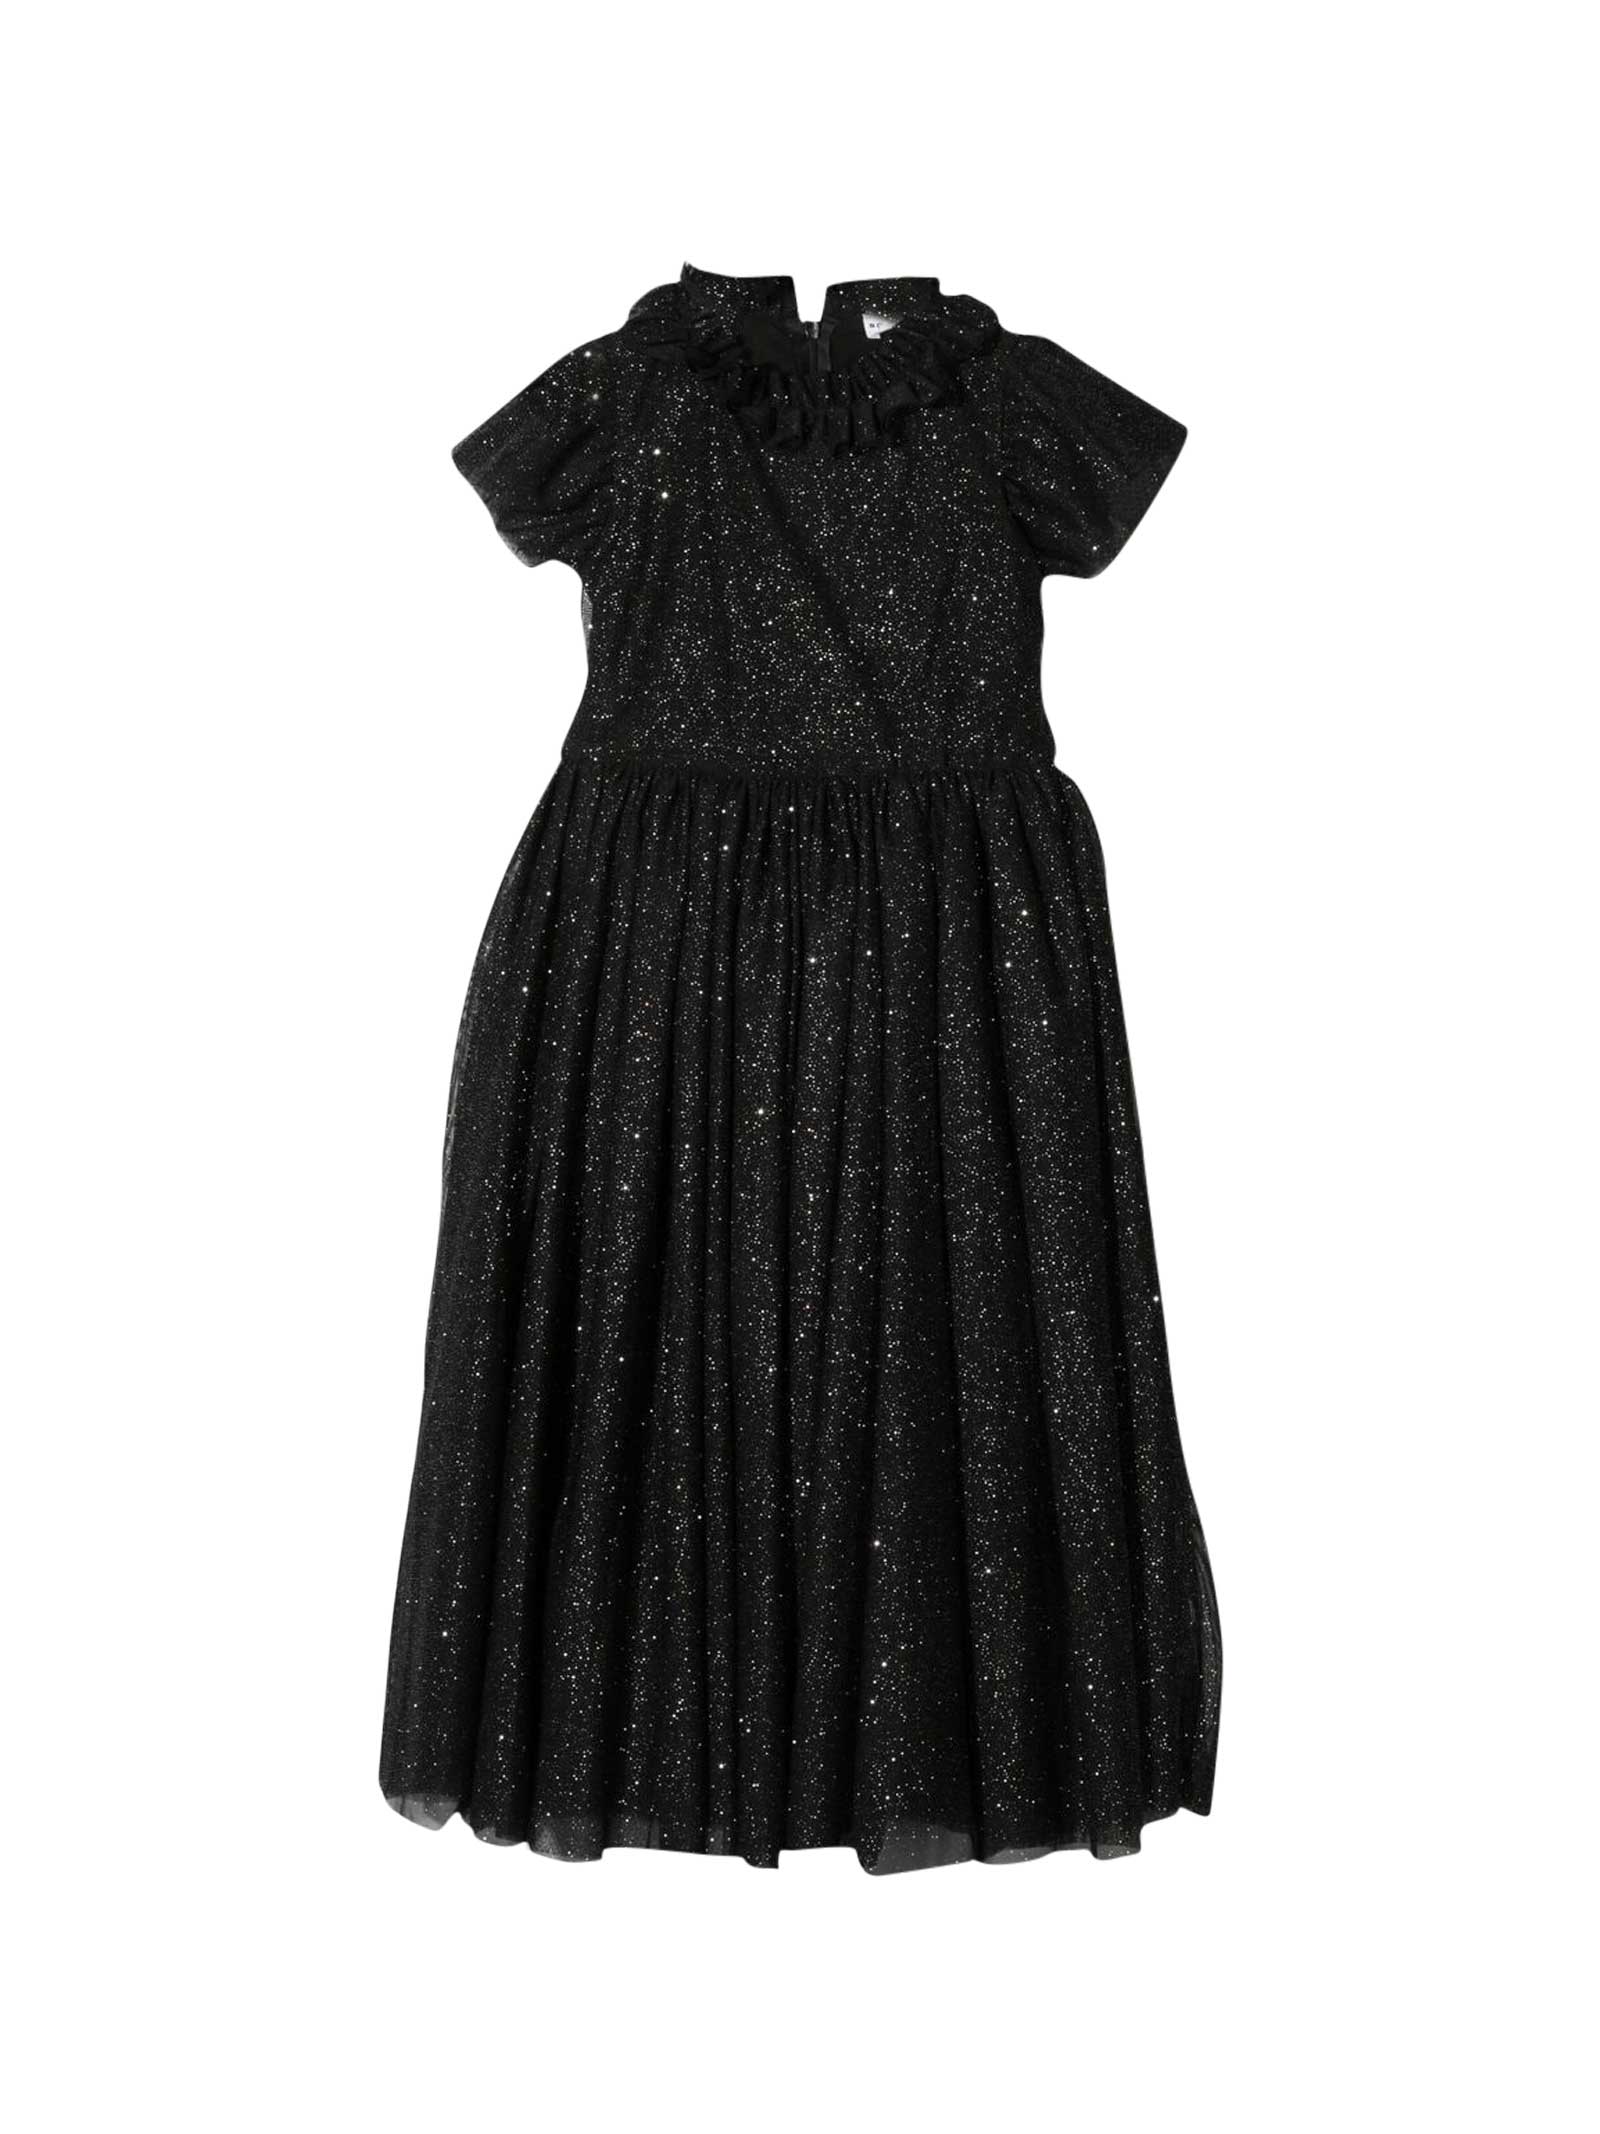 Sonia Rykiel Enfant Black Dress